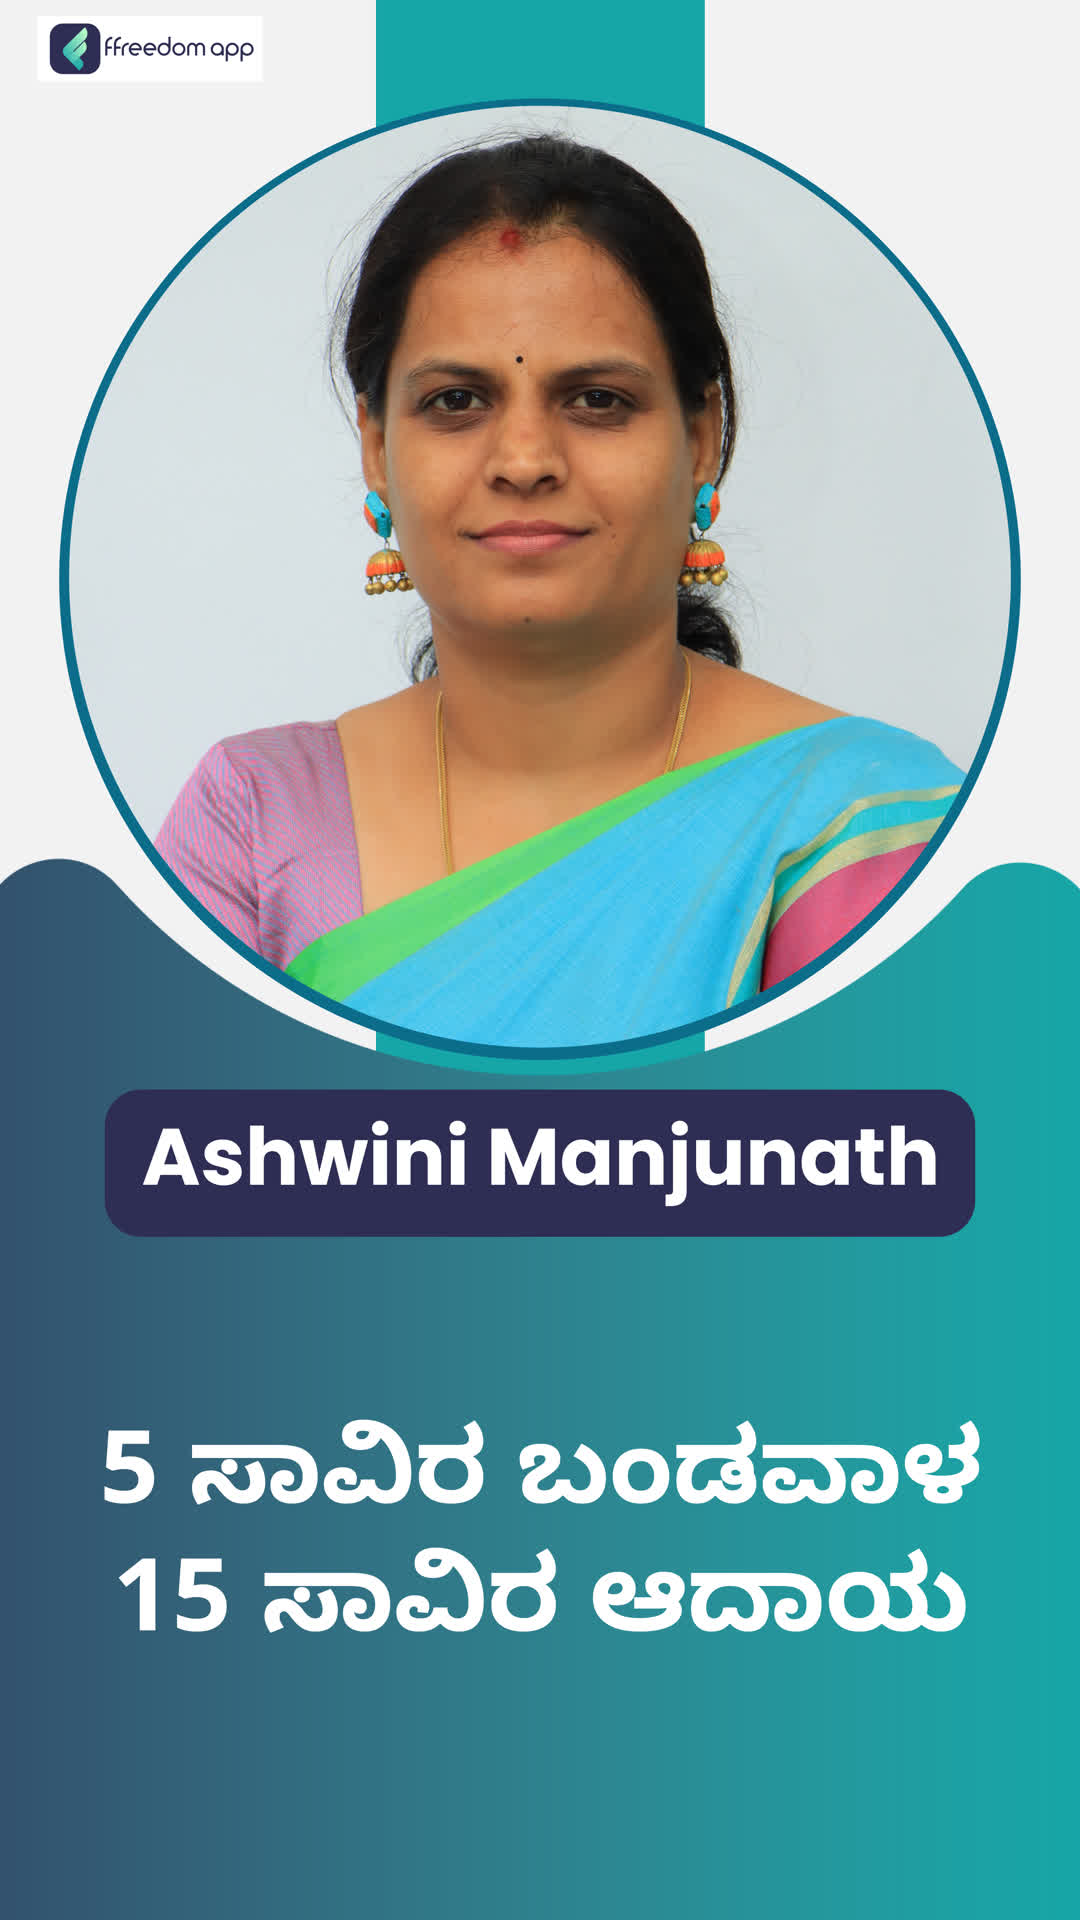 Ashwini Manjunath's Honest Review of ffreedom app - Bengaluru City ,Karnataka